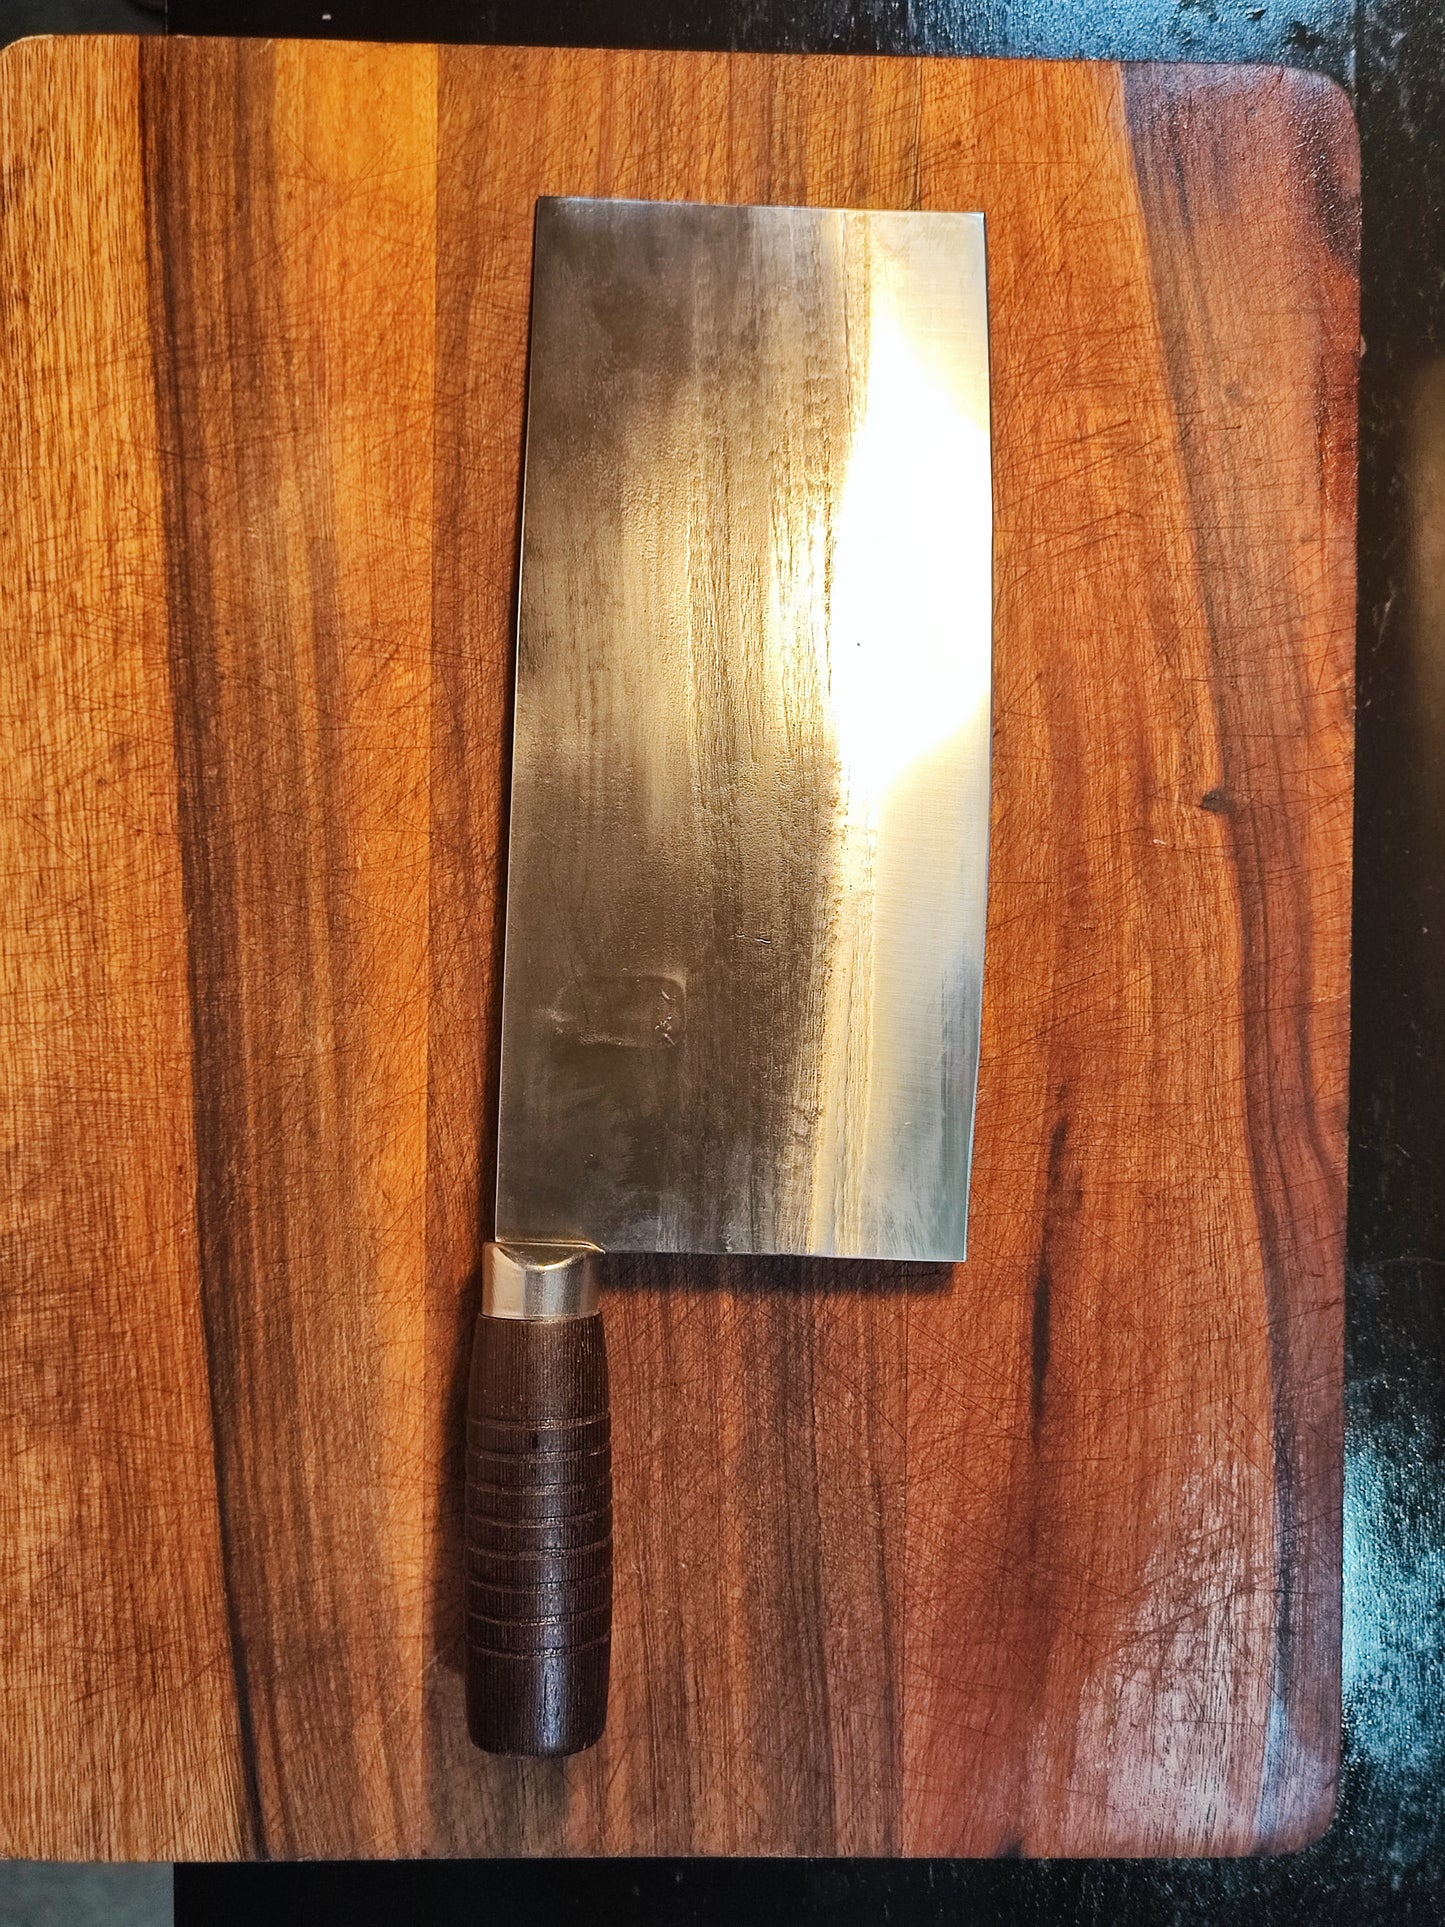 33号折影切片刀
Chinese kitchen knives(中式刀)